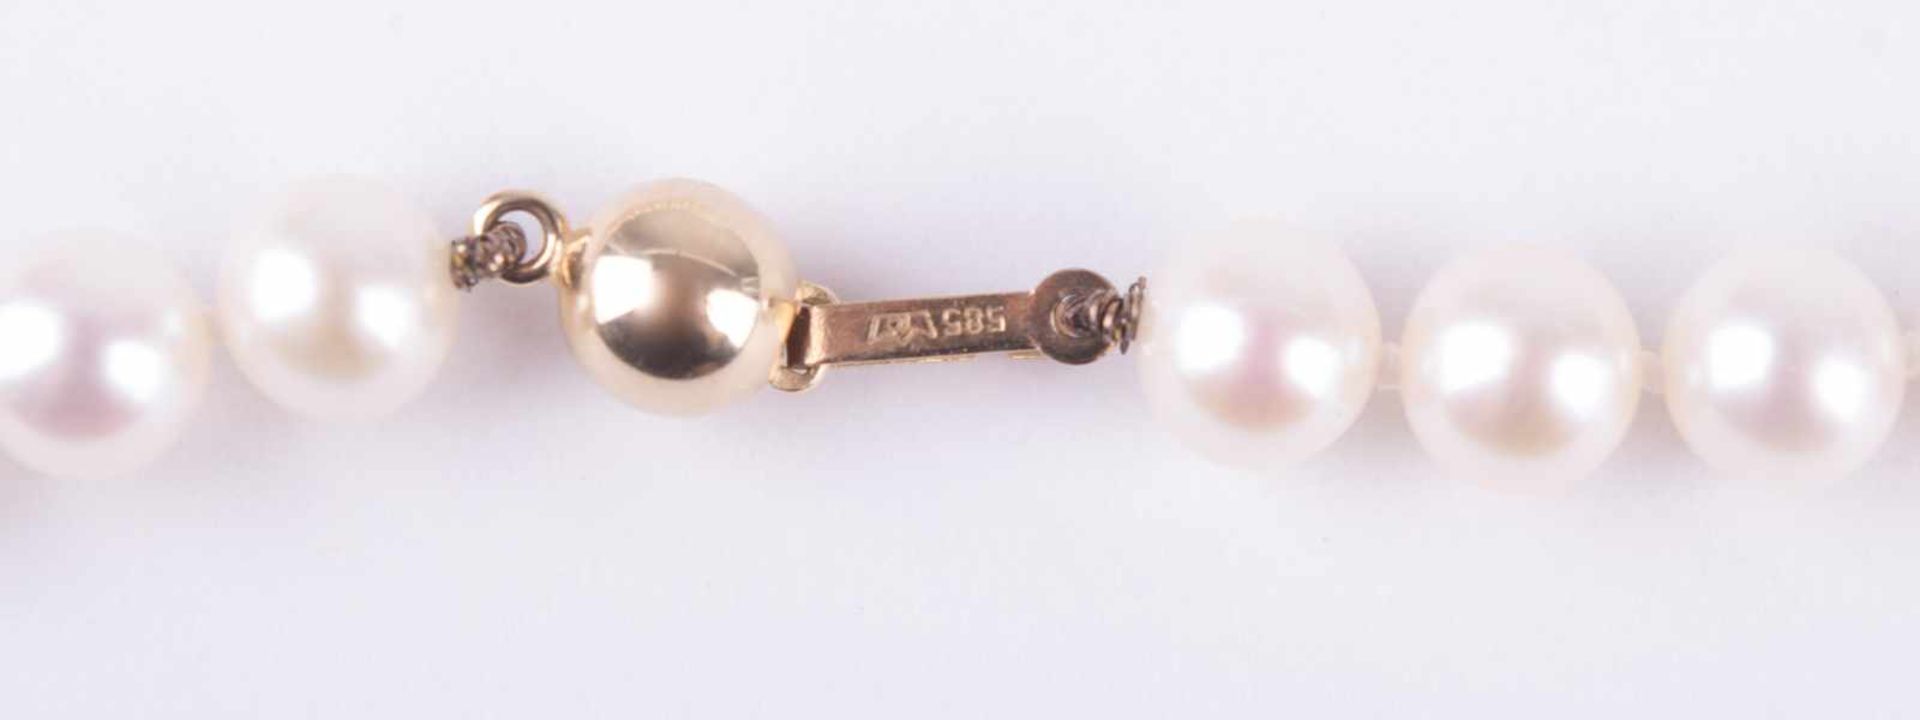 Perlenkette Verschluss GG 585/000, L: 42 cm, Pearl necklace clasp yellow gold 14 kt, lenght: 42 cm - Bild 3 aus 3